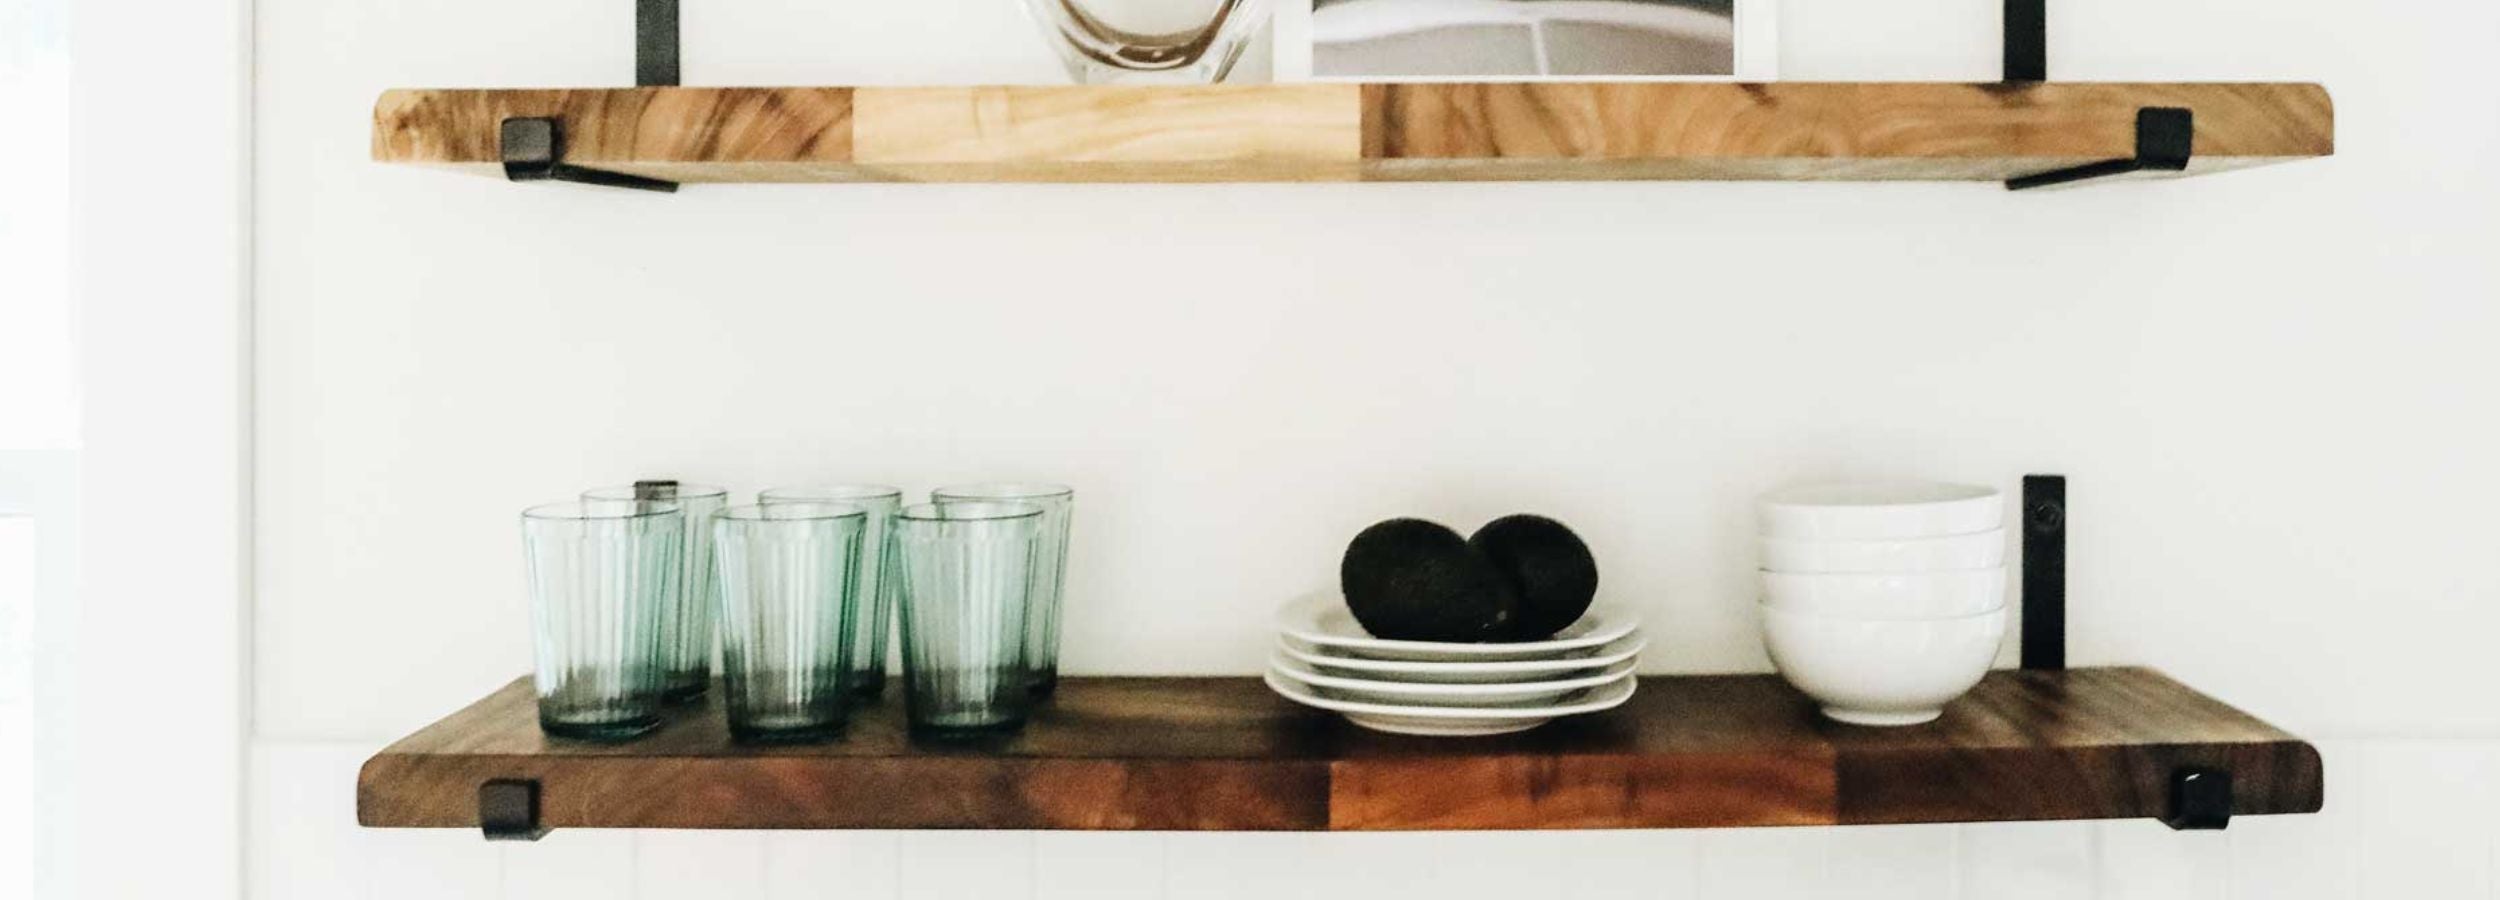 kitchen shelf brackets with wood shelves